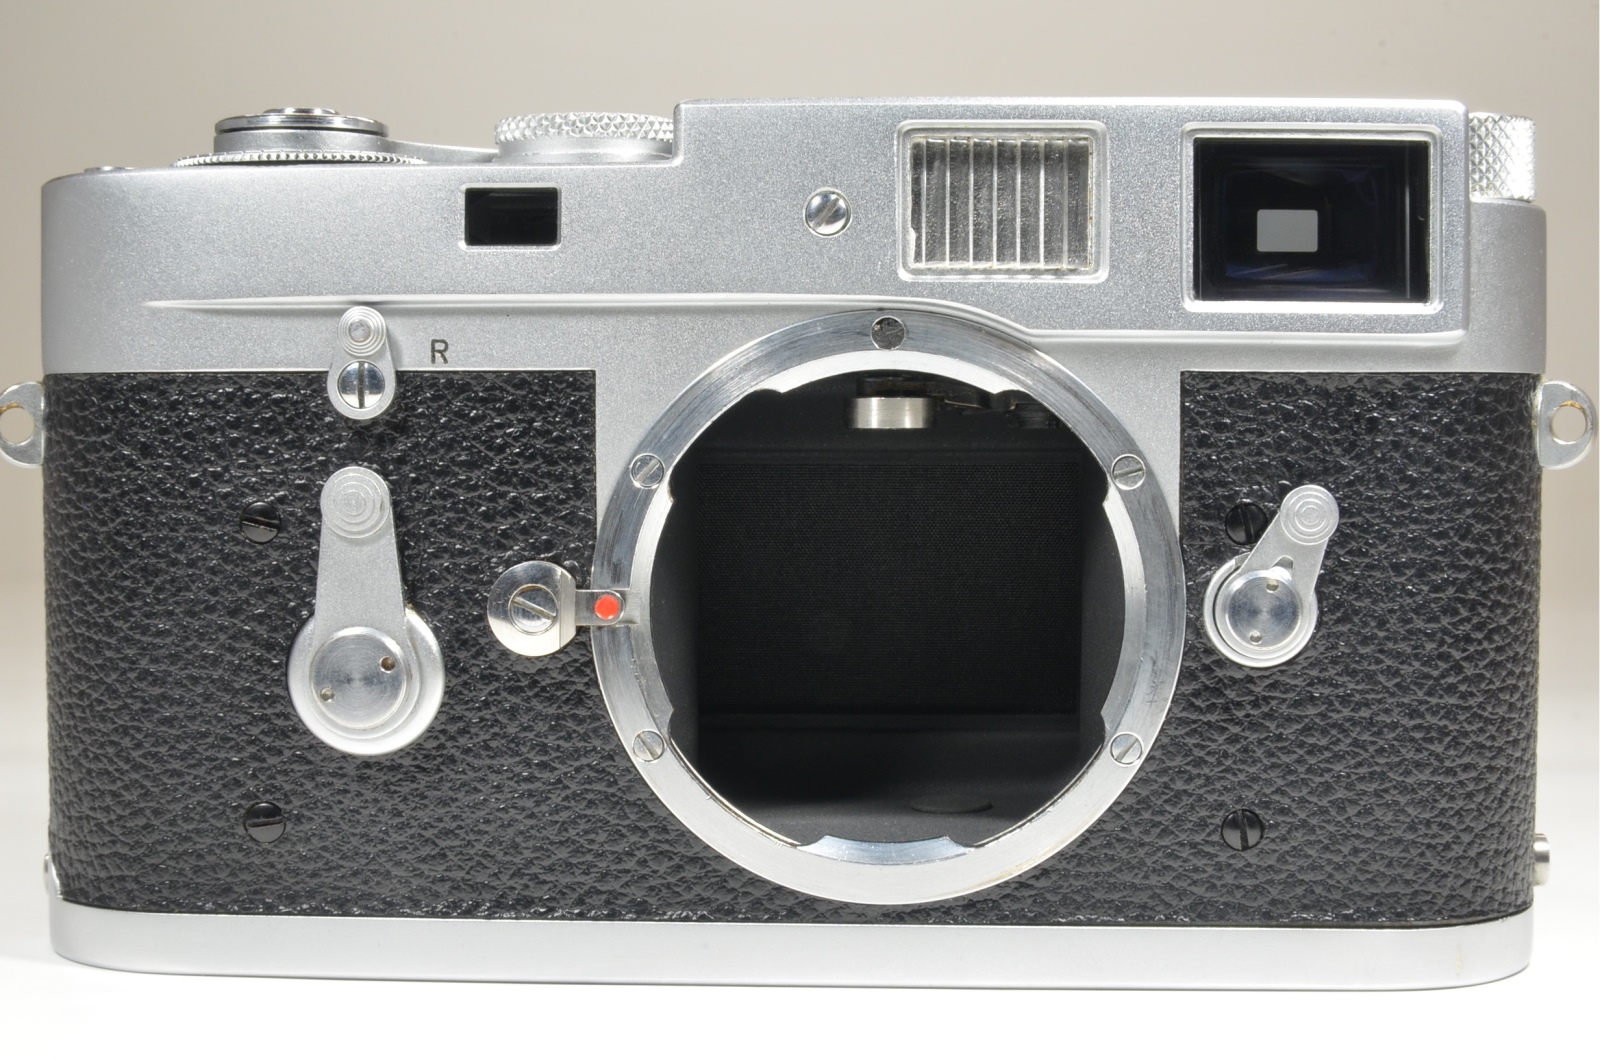 leica m2 self timer rangefinder film camera s/n 1054179 year 1962